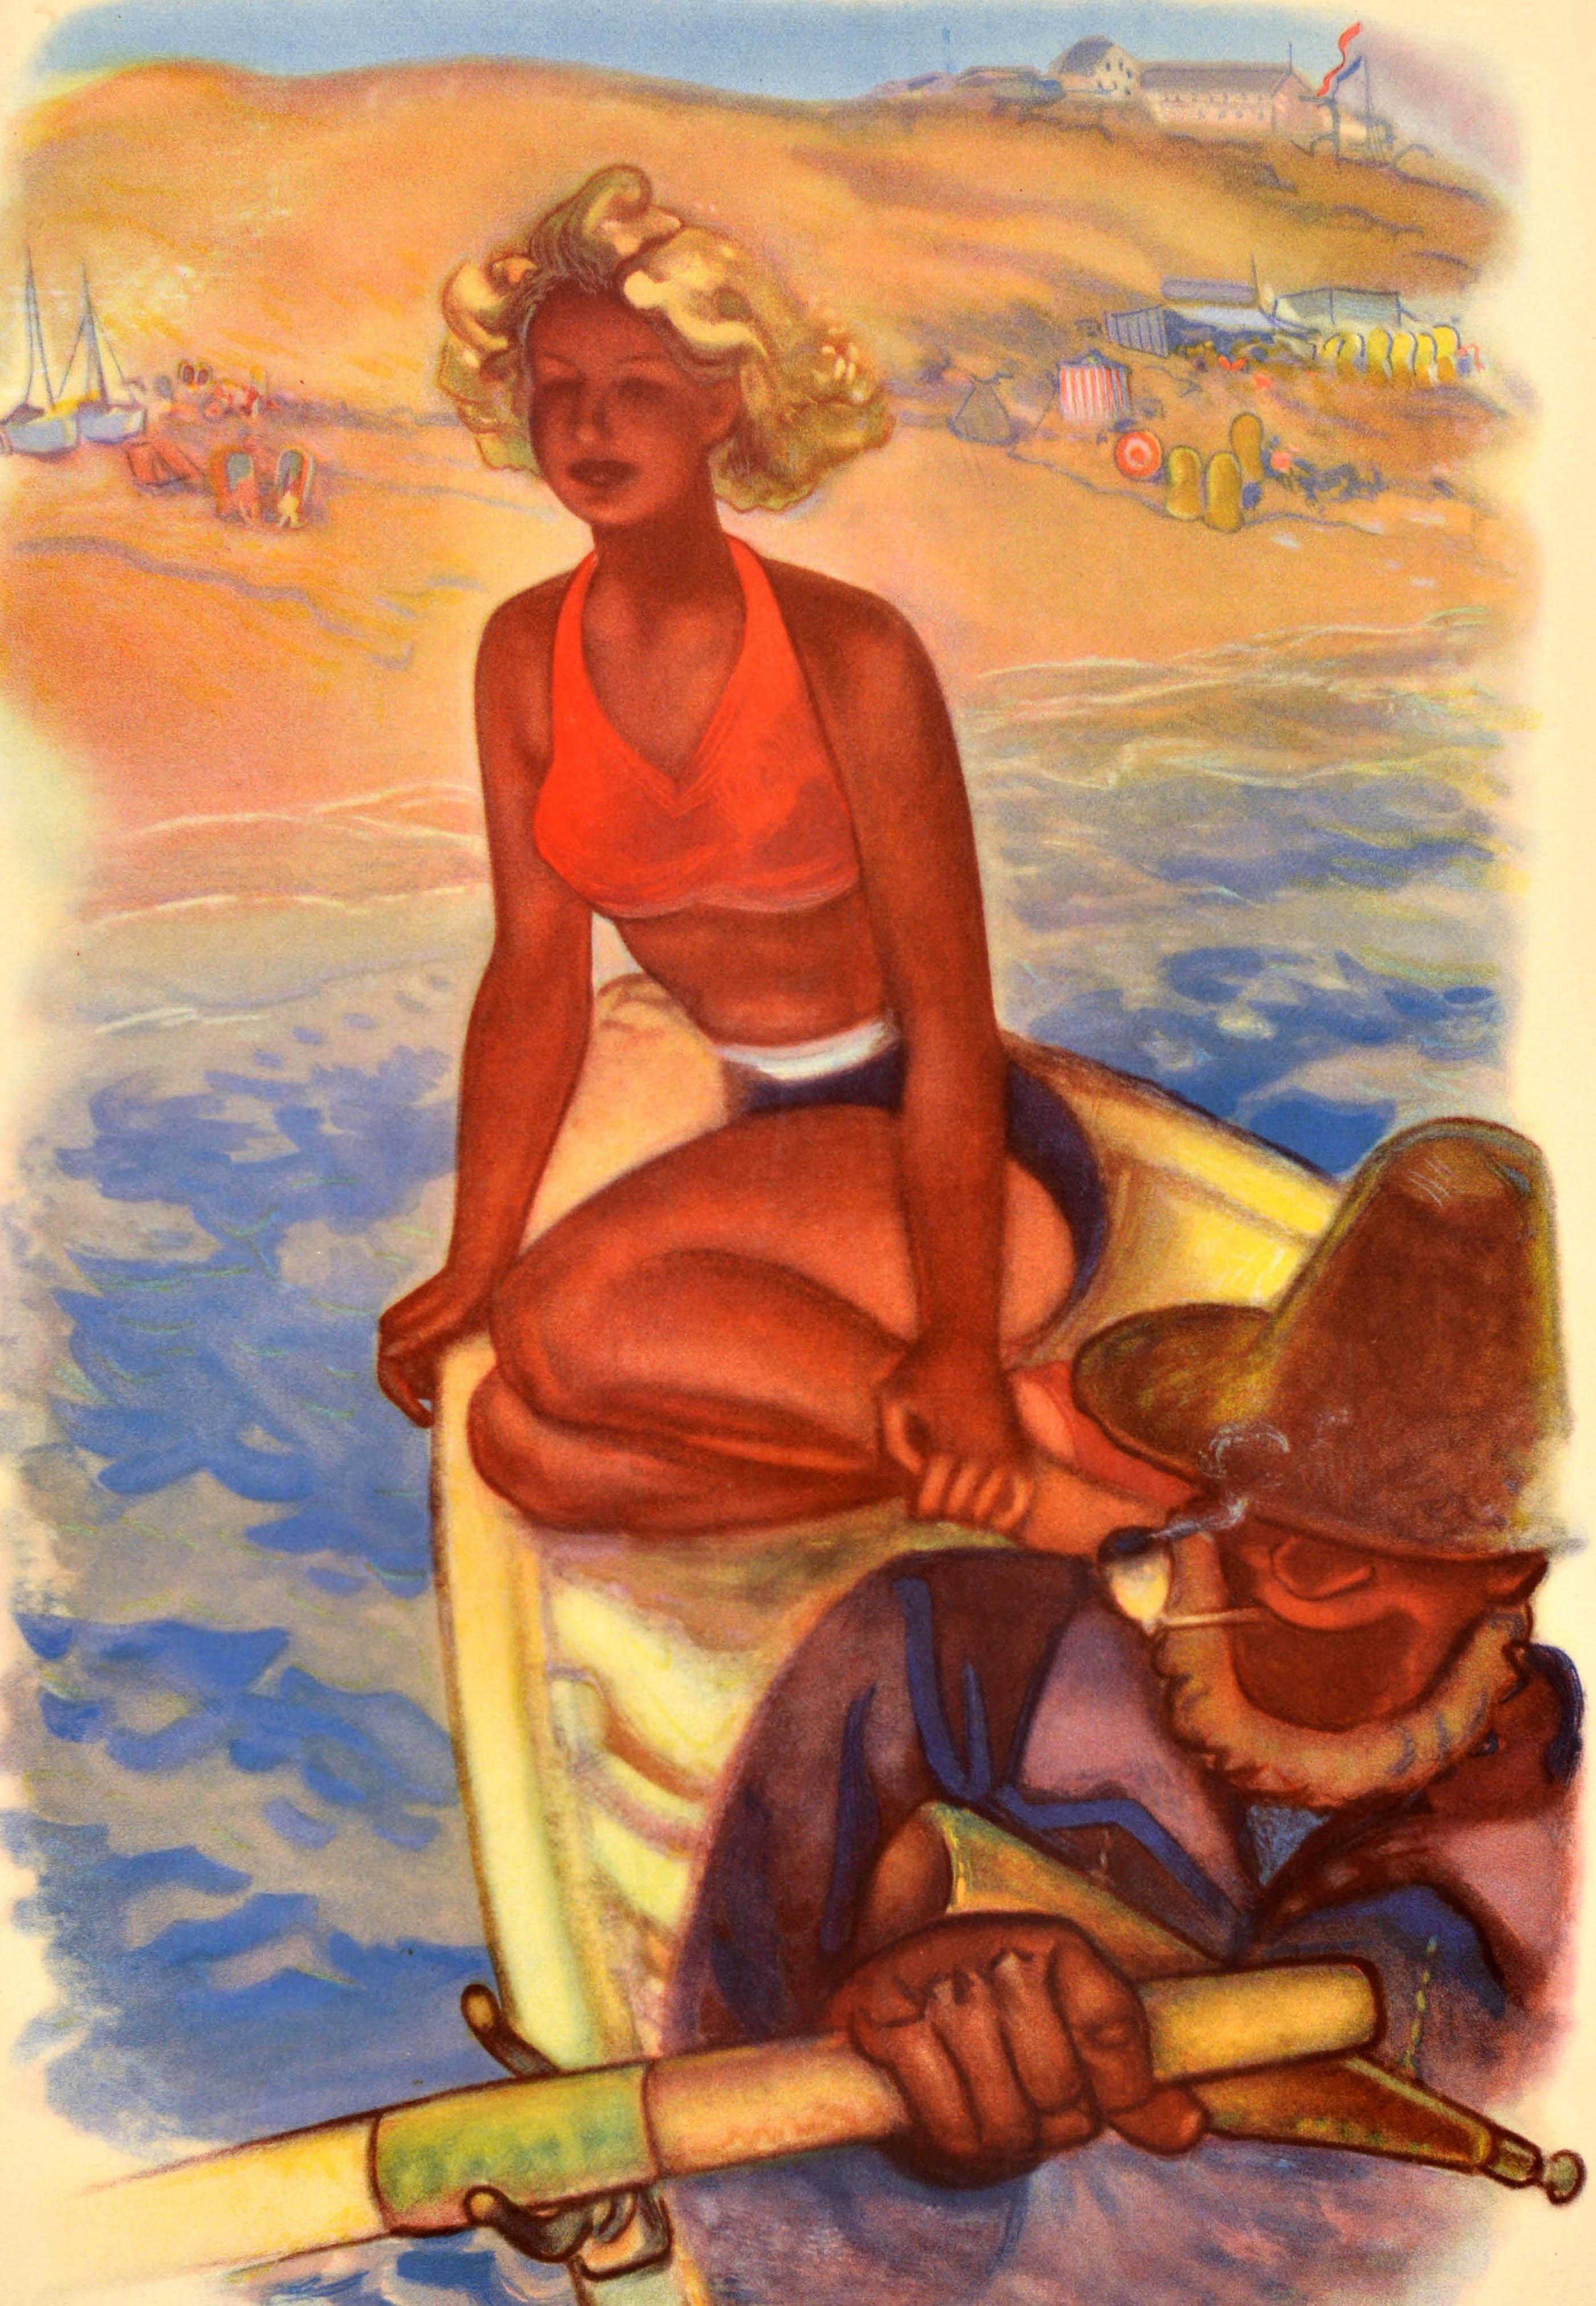 Original Vintage Travel Poster Holland Beach Fisherman Netherlands Midcentury - Print by Unknown